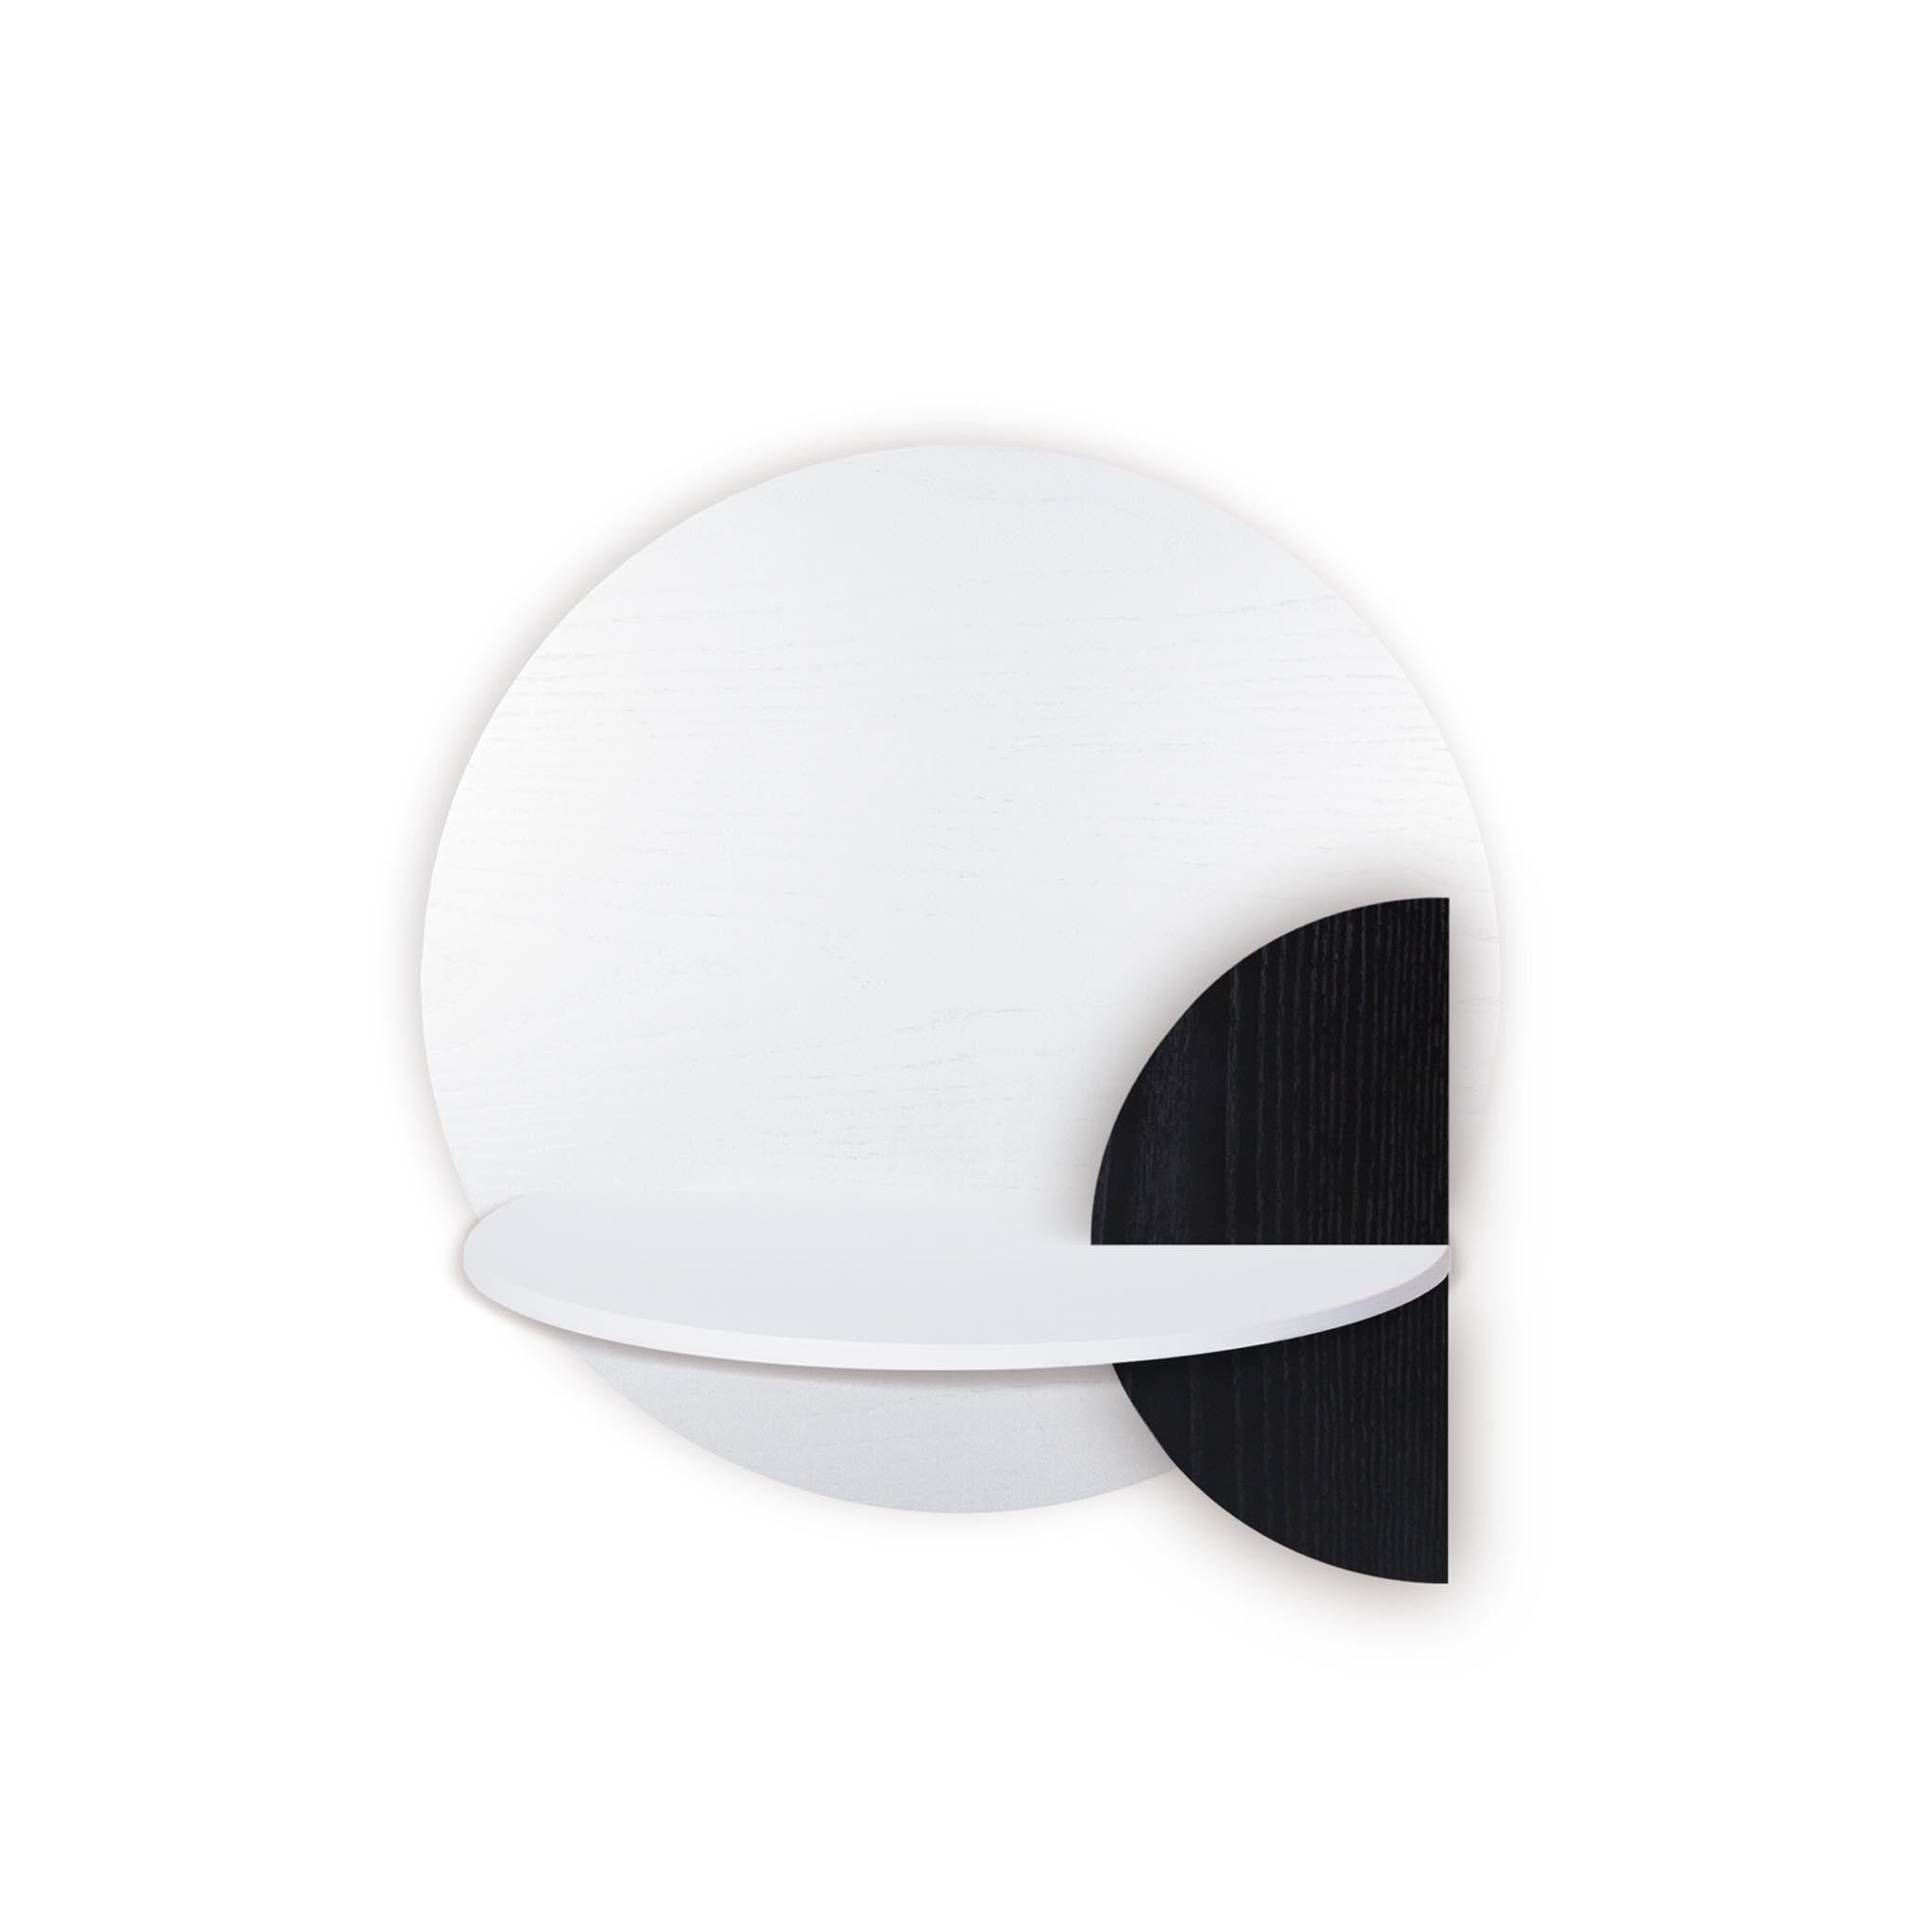 Alba floating nightstand · White circle